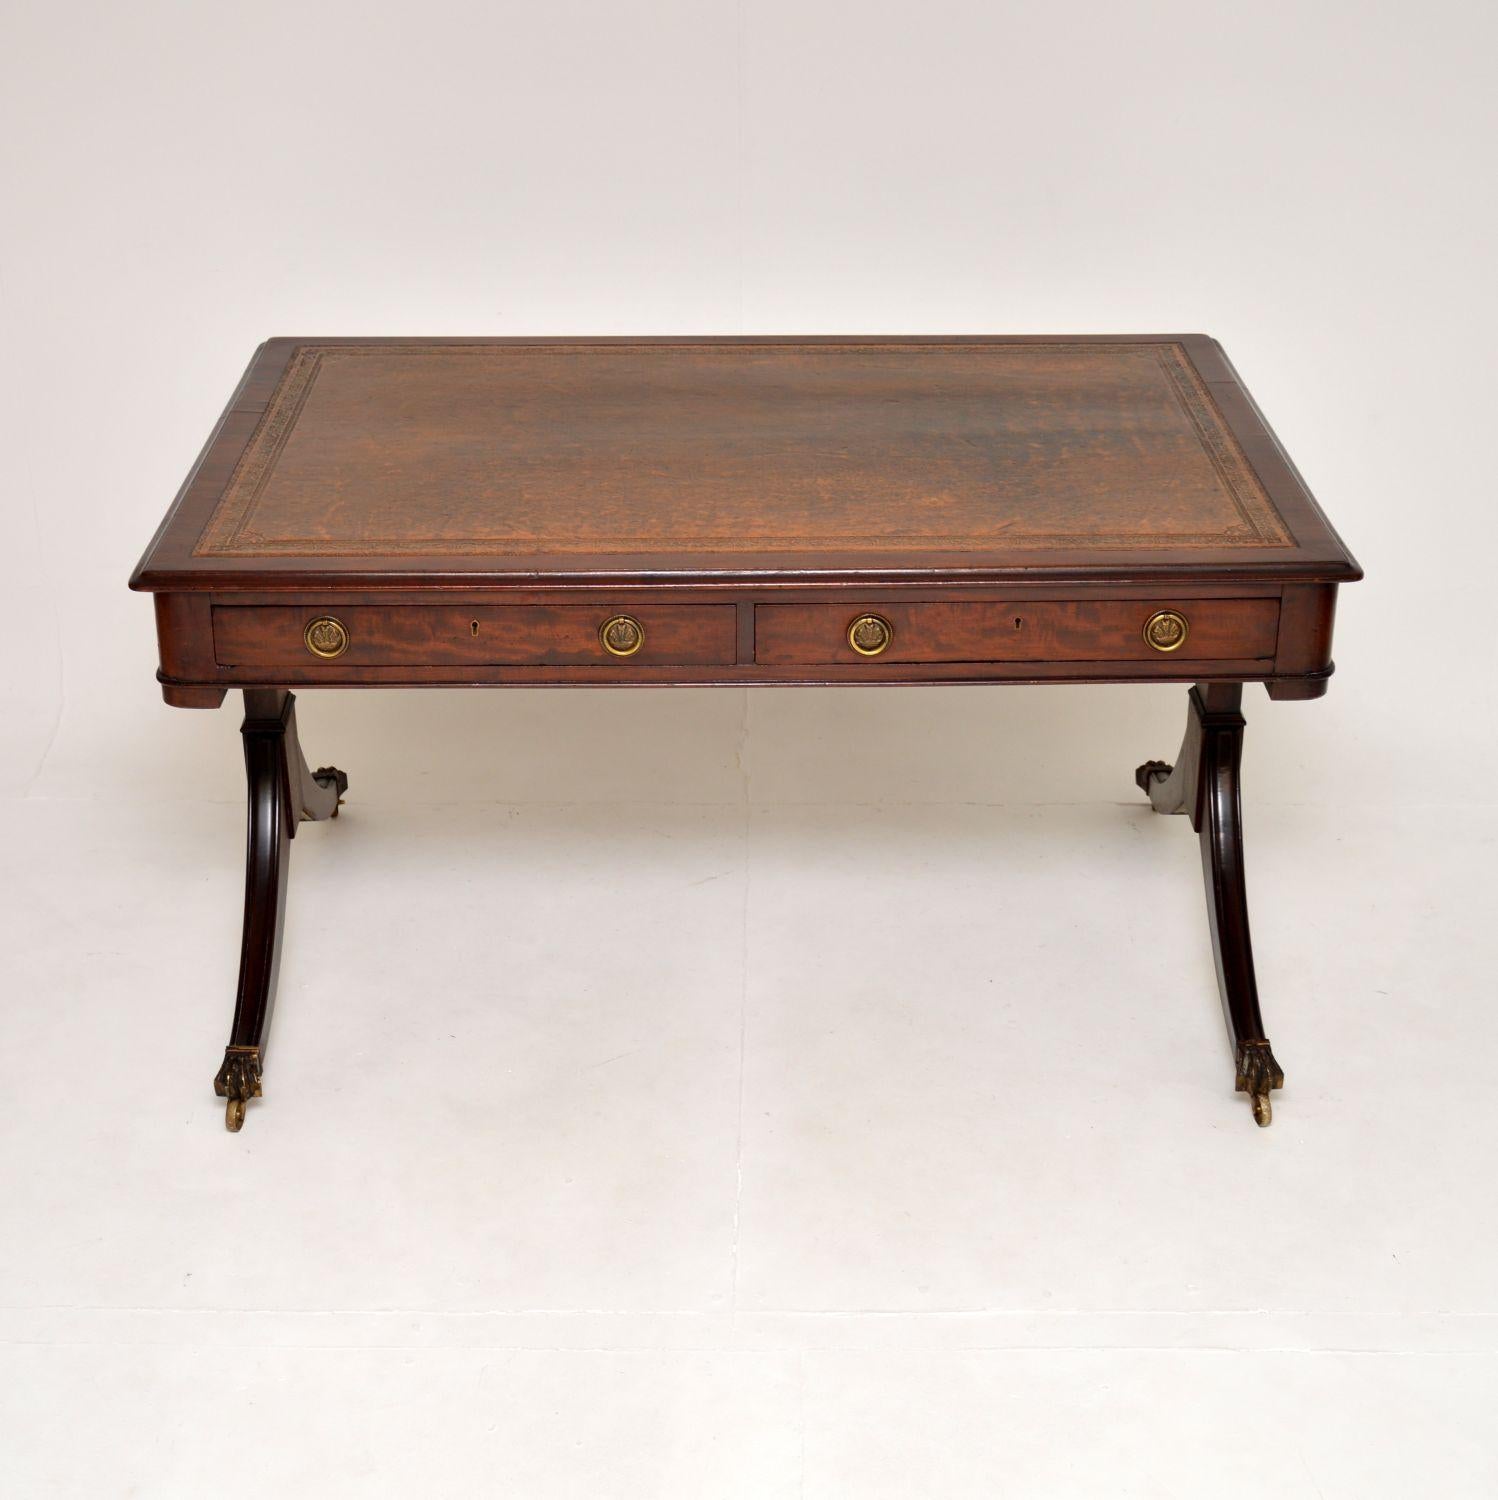 British Antique Regency Period Leather Top Partners Desk